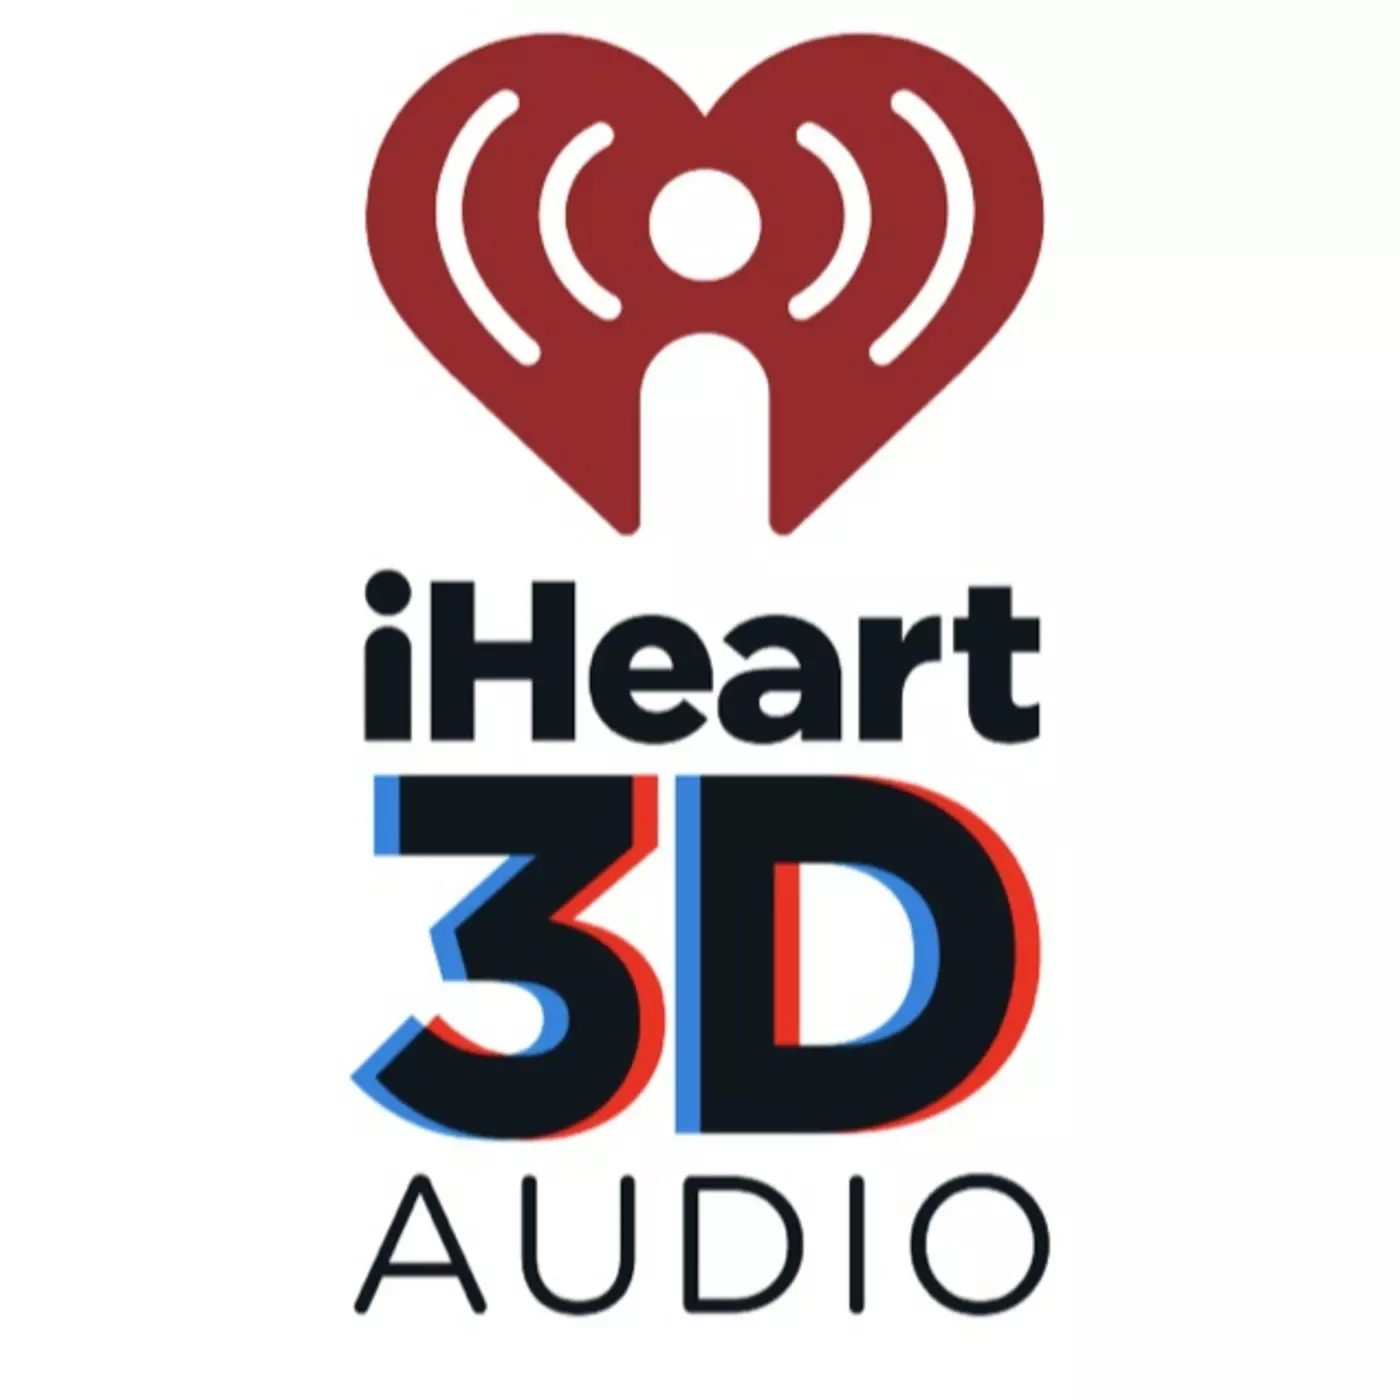 iheart-3D-audio-logo.webp